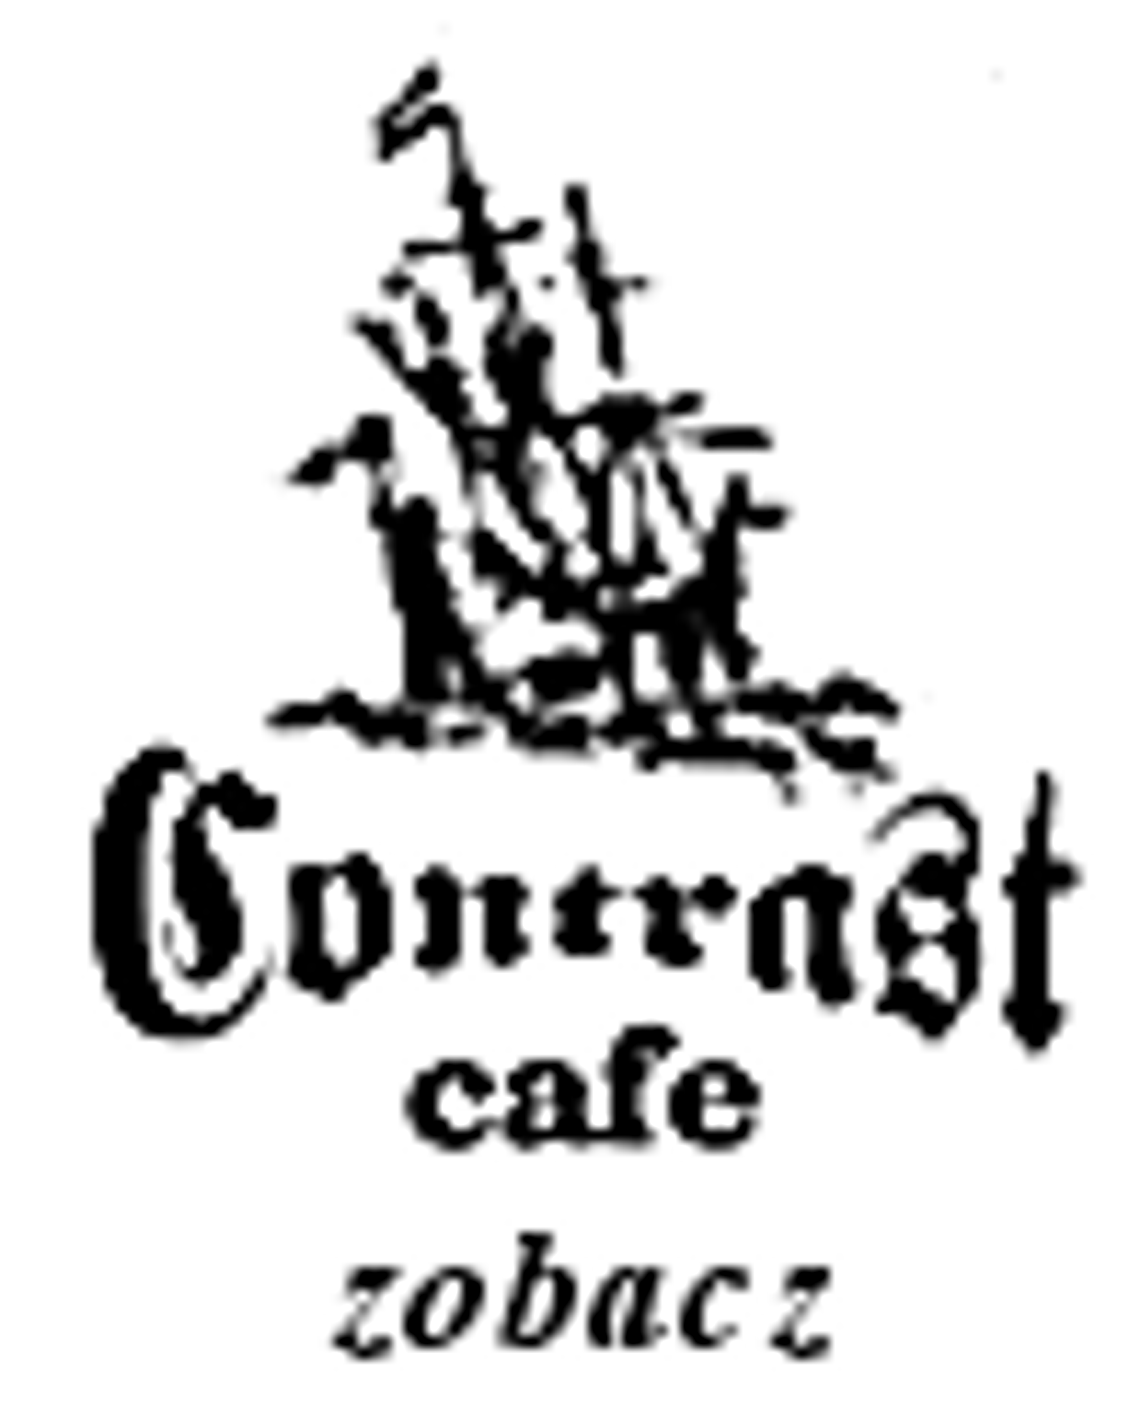 Contrast Cafe